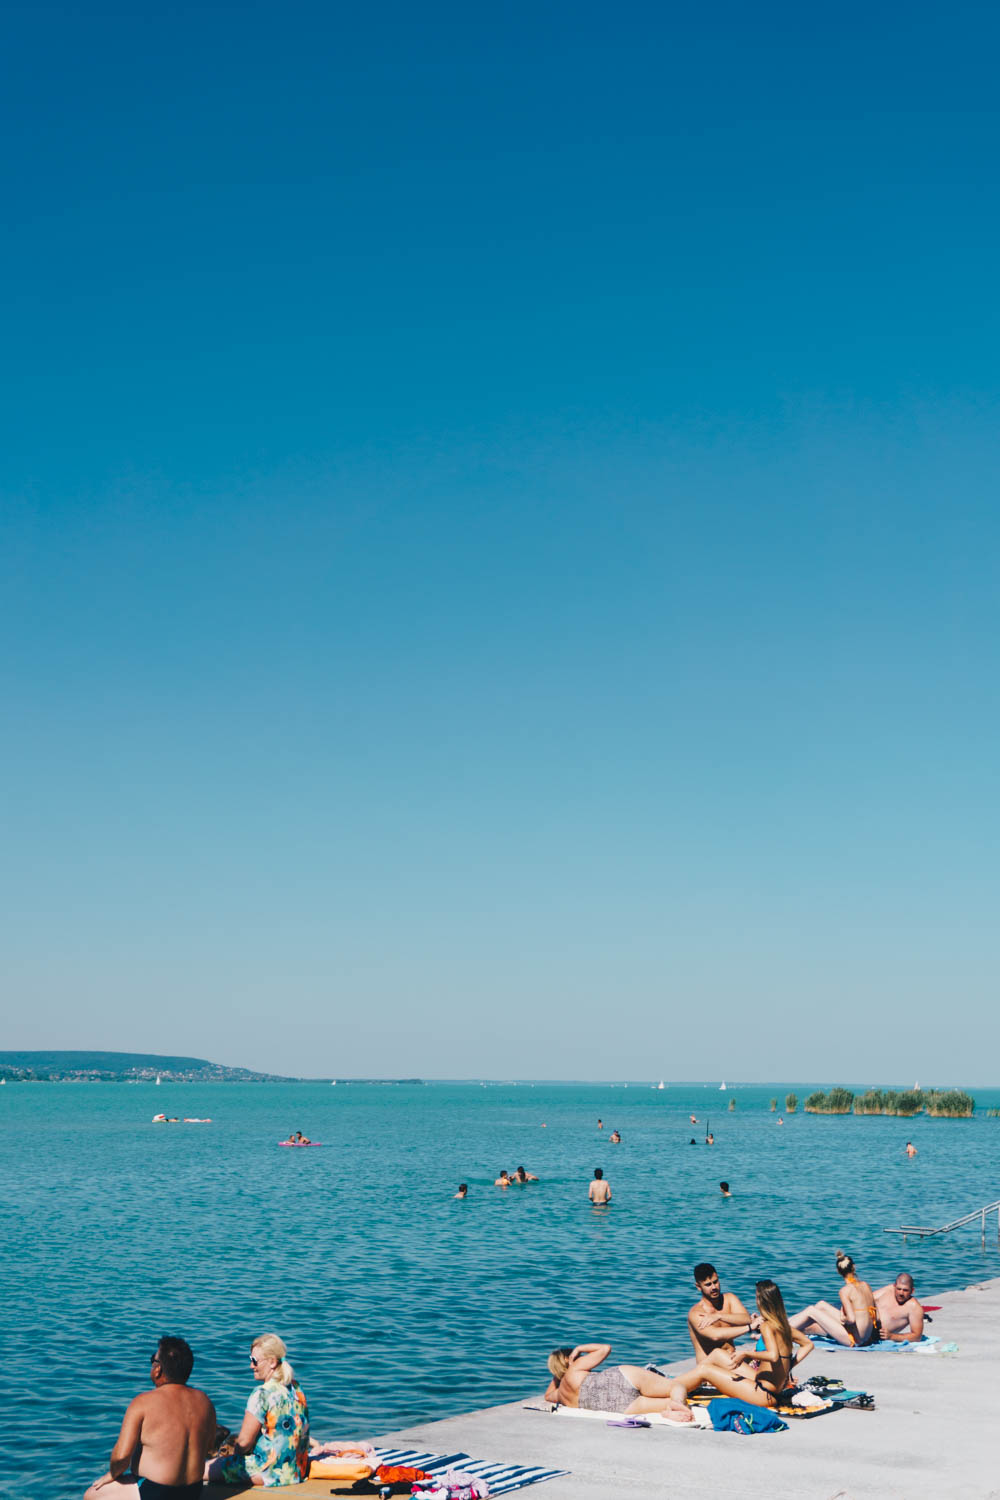 Budapest Hungary Travel Guide / Day Trip / Lake Balaton / RG Daily Blog /